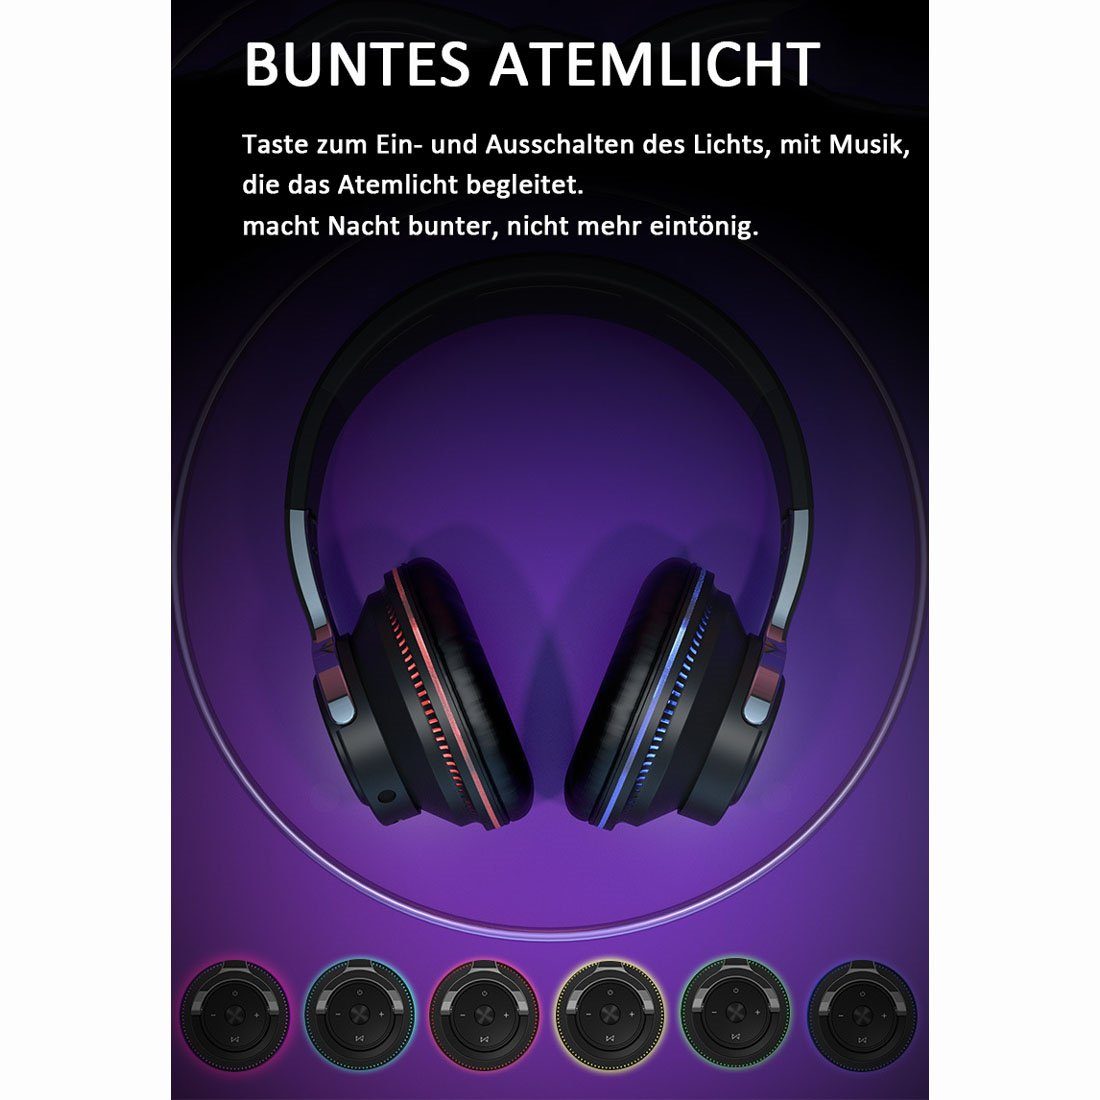 kabelloses Schwarz Vollpaket-Sport-Headset Bluetooth-Kopfhörer DÖRÖY Bluetooth-Headset, Gaming-Headset,